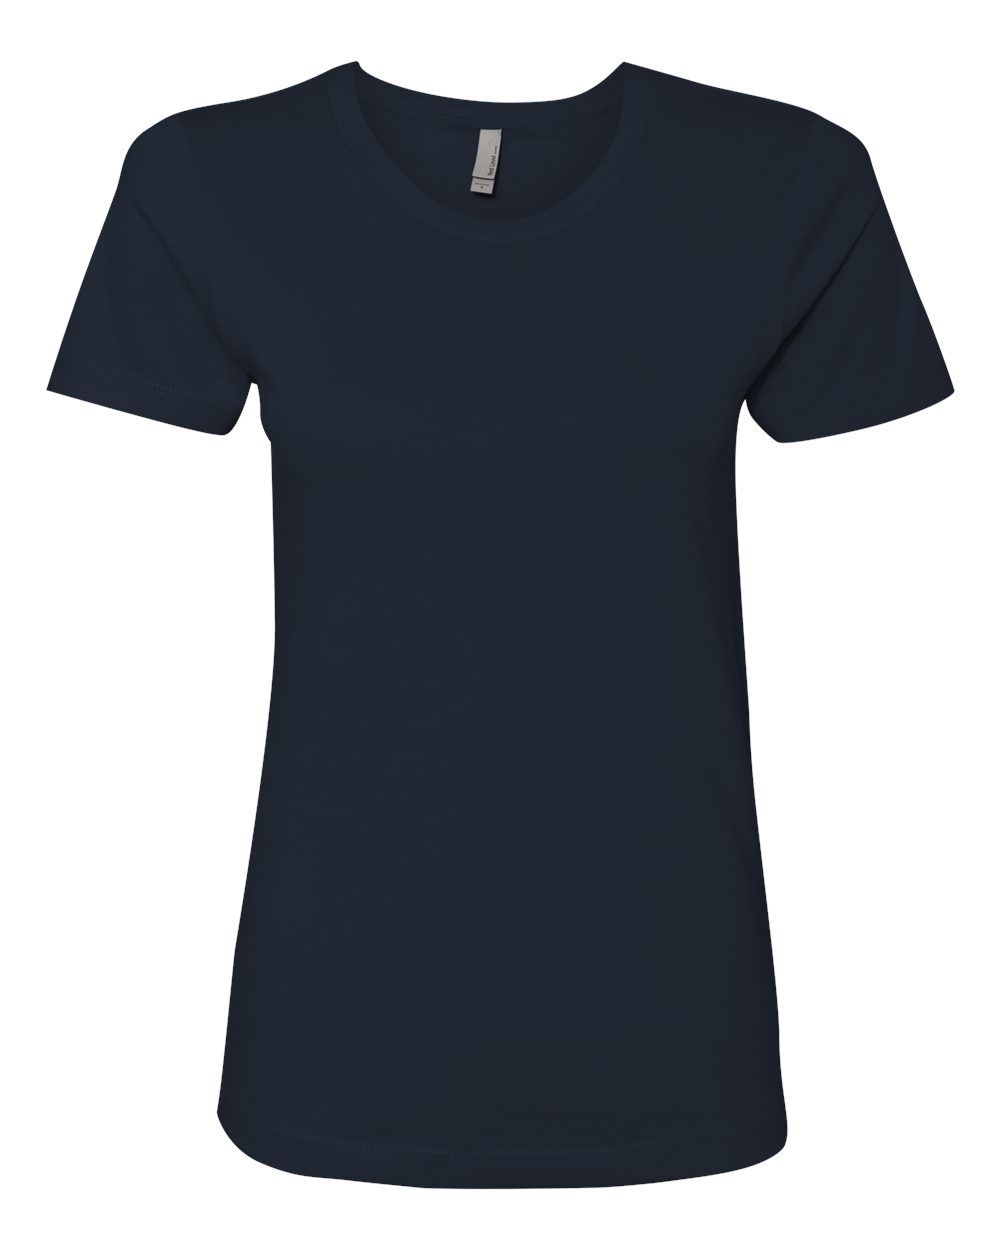 Next Level Women's The Boyfriend Tee Shirt Top 3900 Blank Plain Solid ...